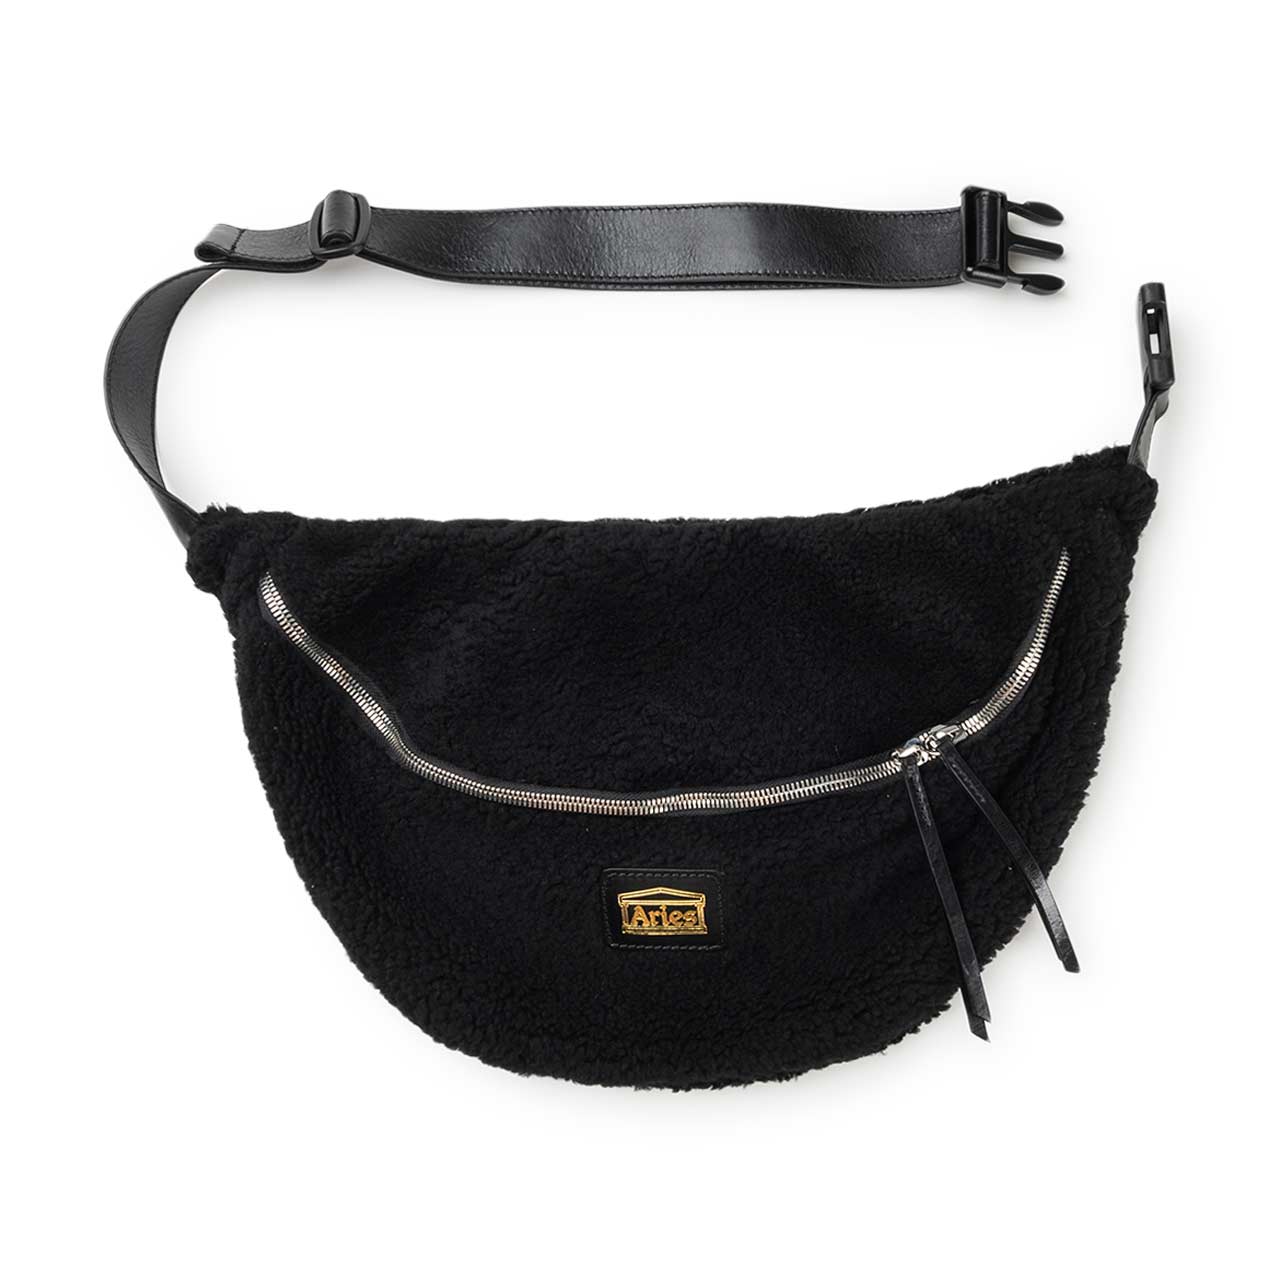 aries sheepskin elis bag (black) - spar10002 - a.plus - Image - 1